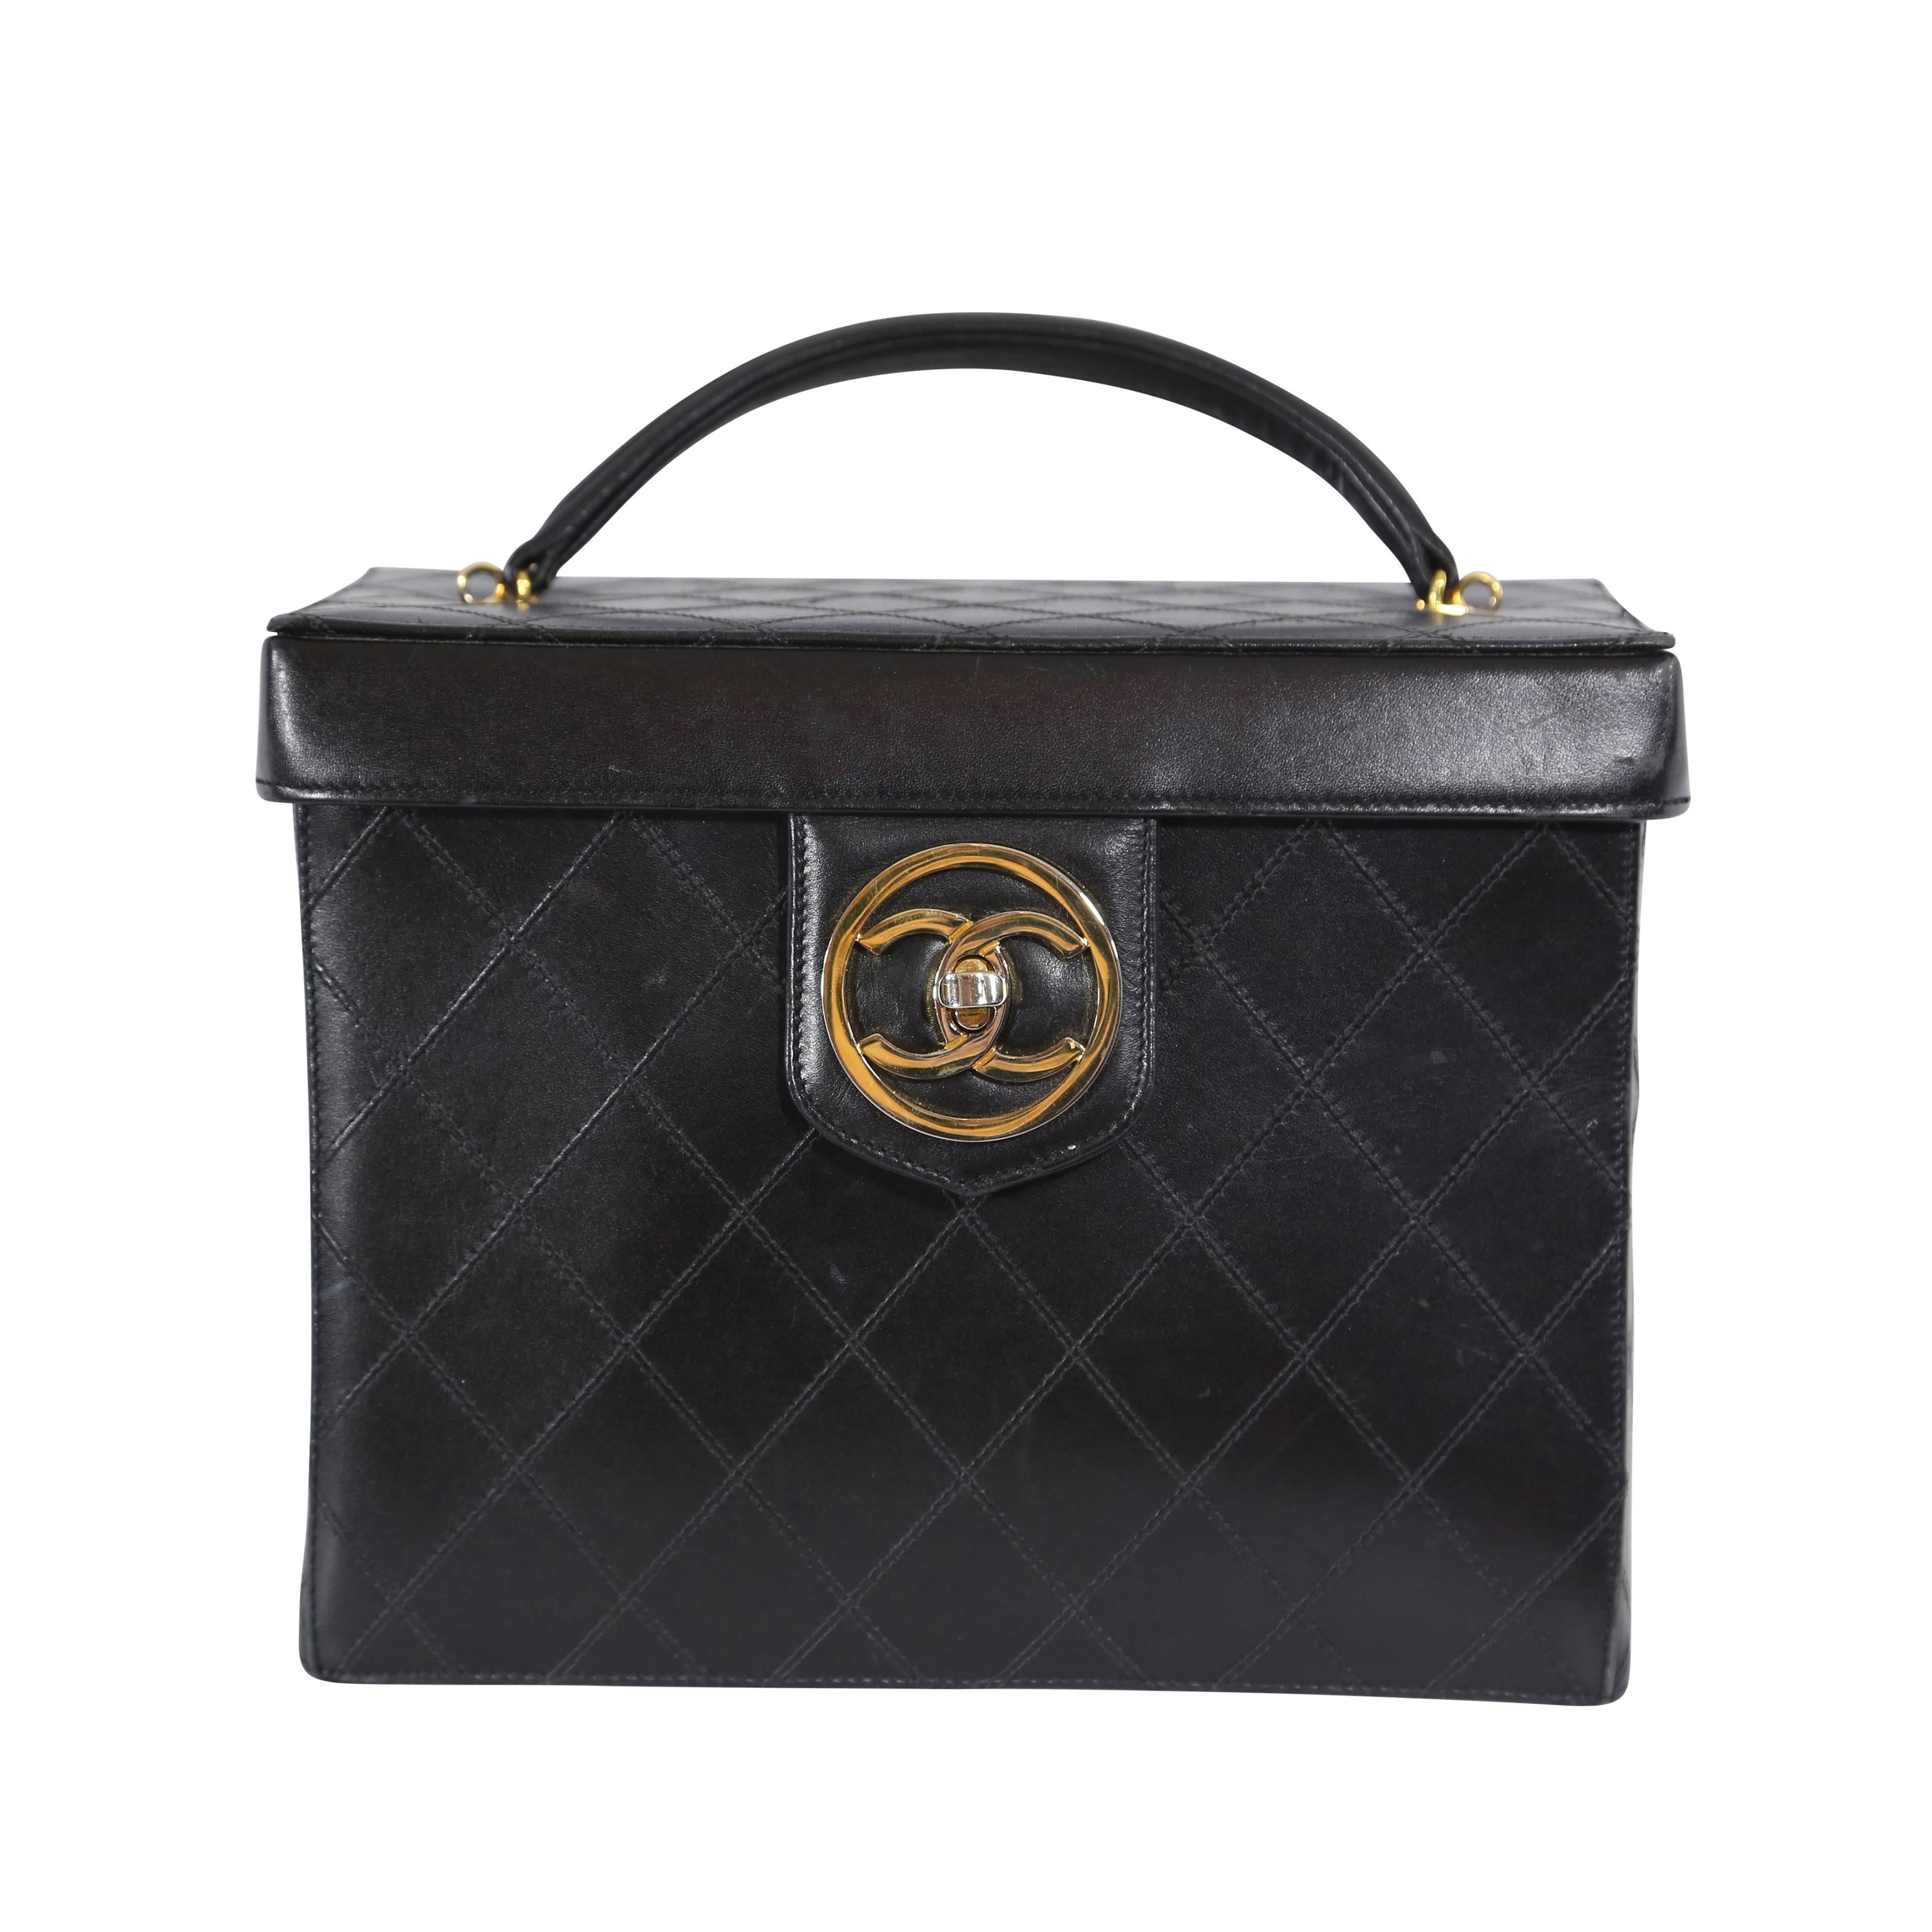 Chanel Black Leather Trunk Case Handbag